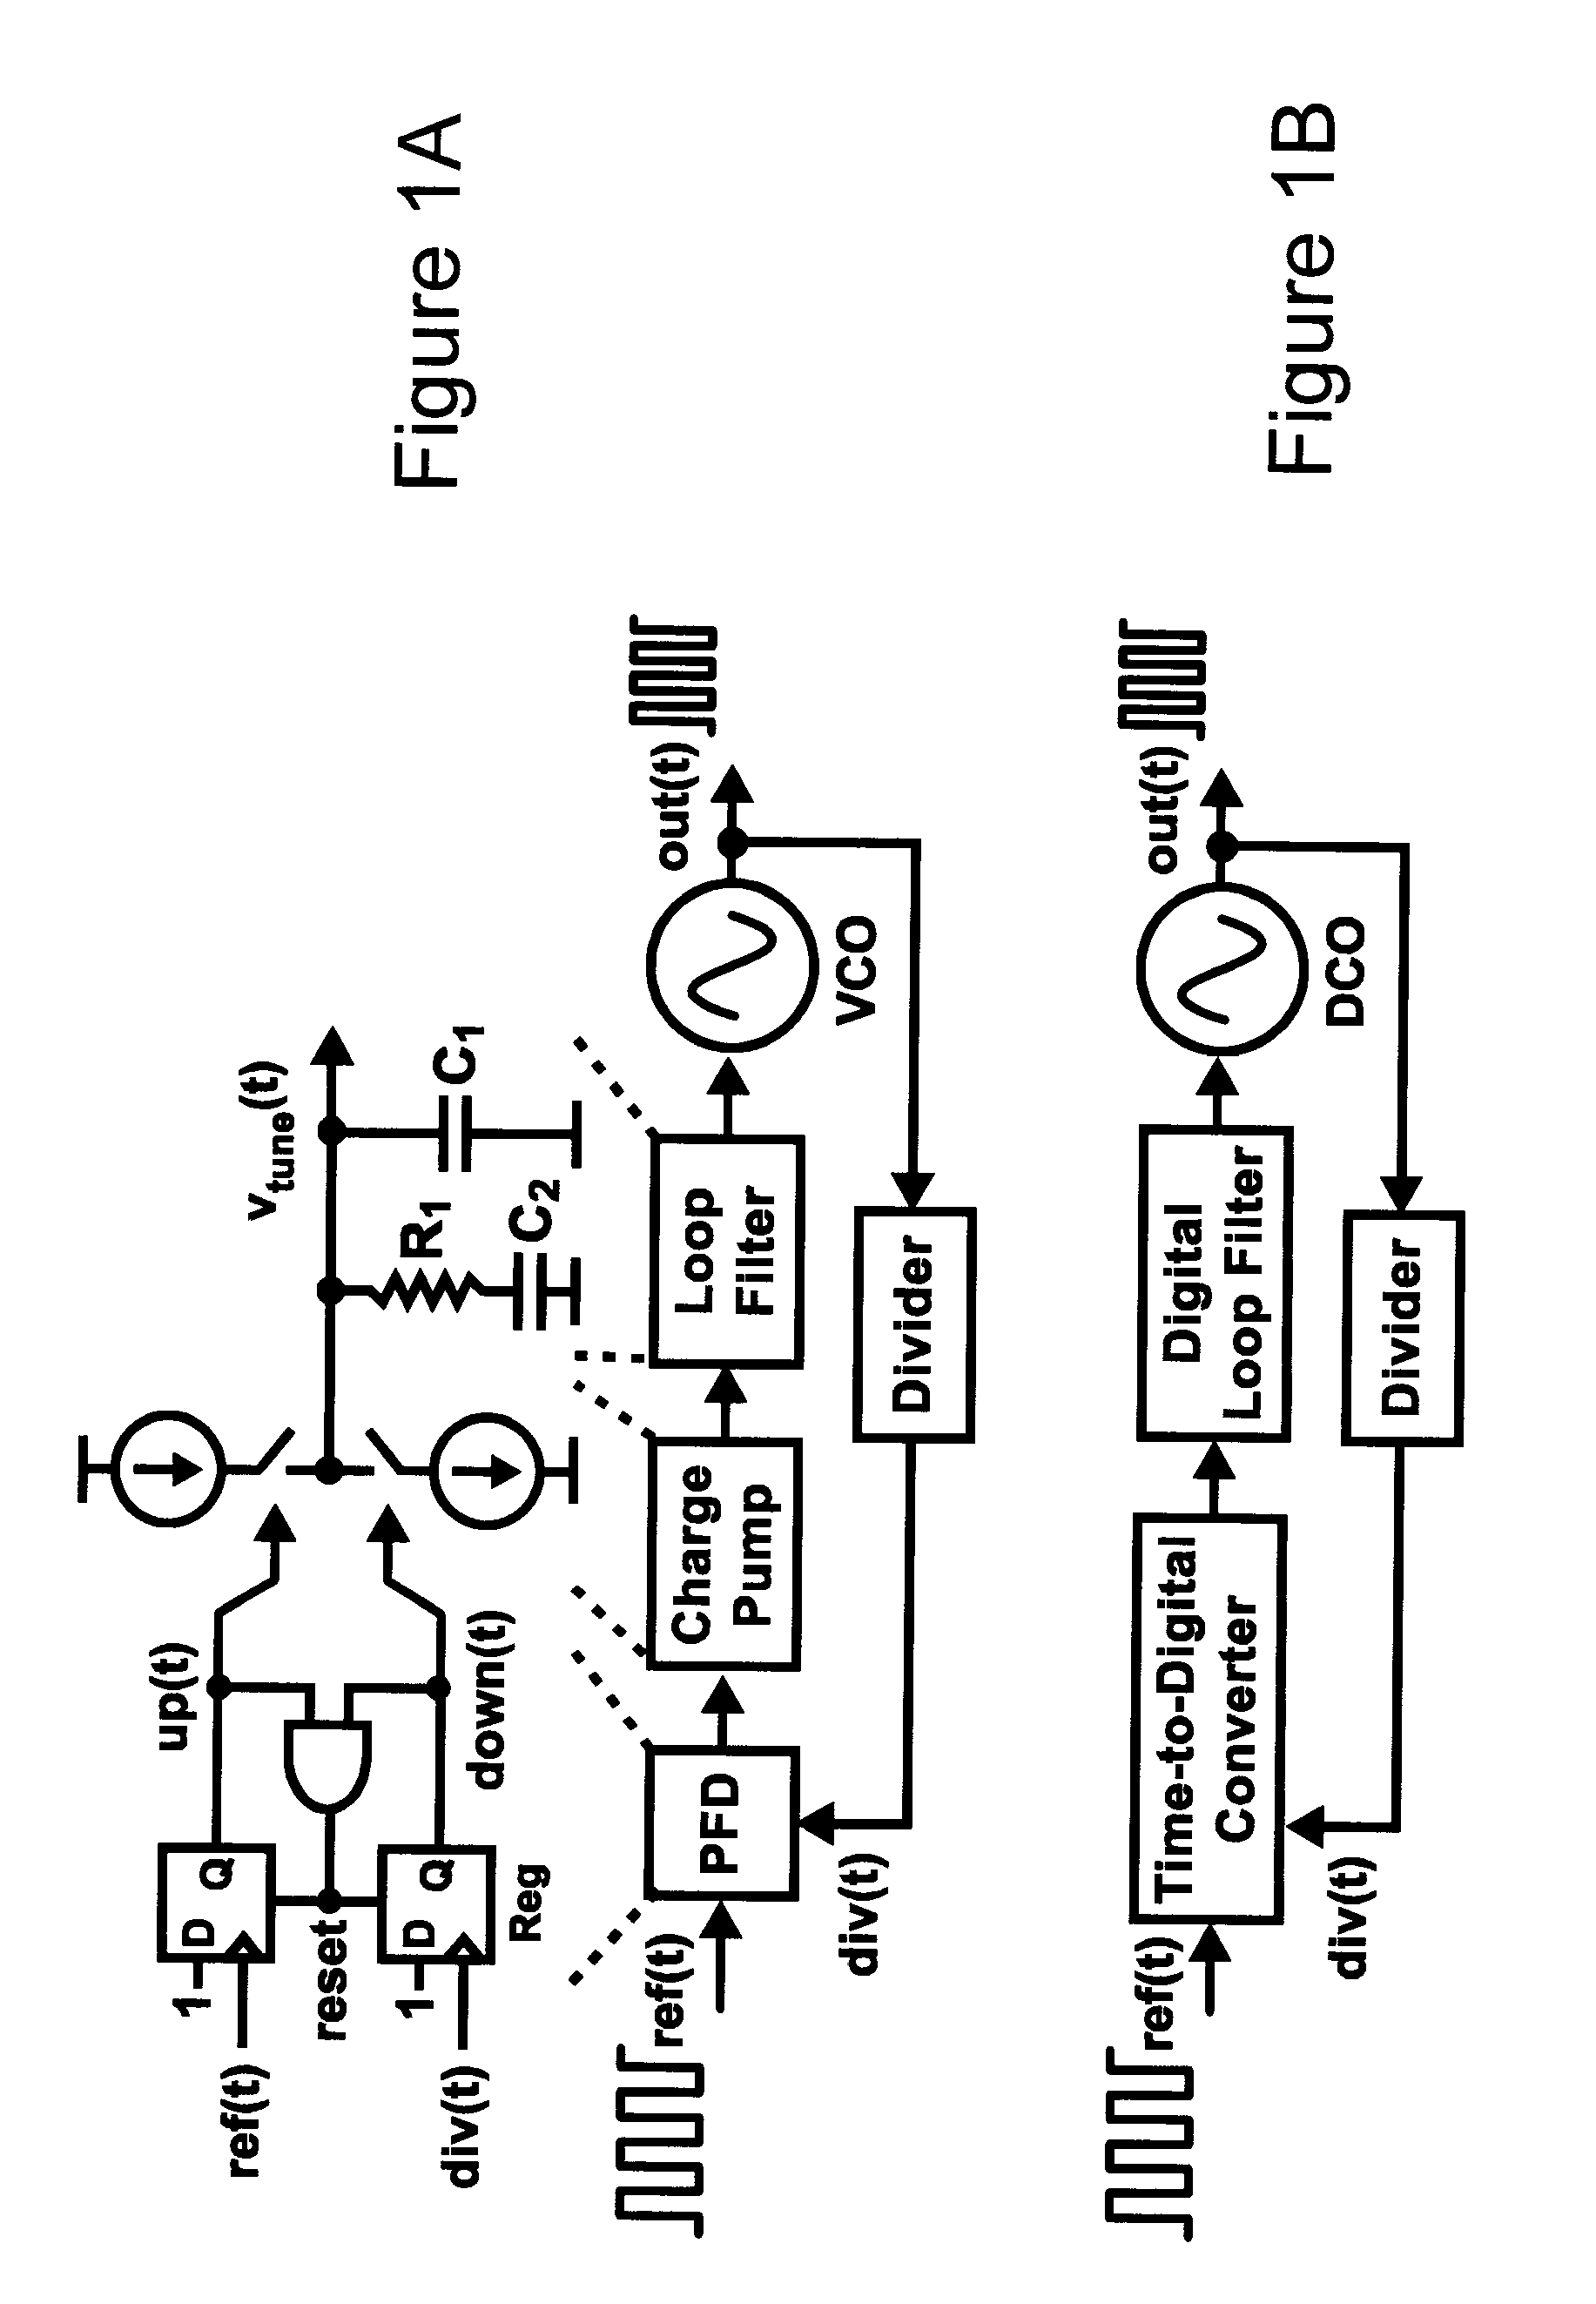 Phase Locked Loop Circuitry Having Switched Resistor Loop Filter Circuitry, and Methods of Operating Same